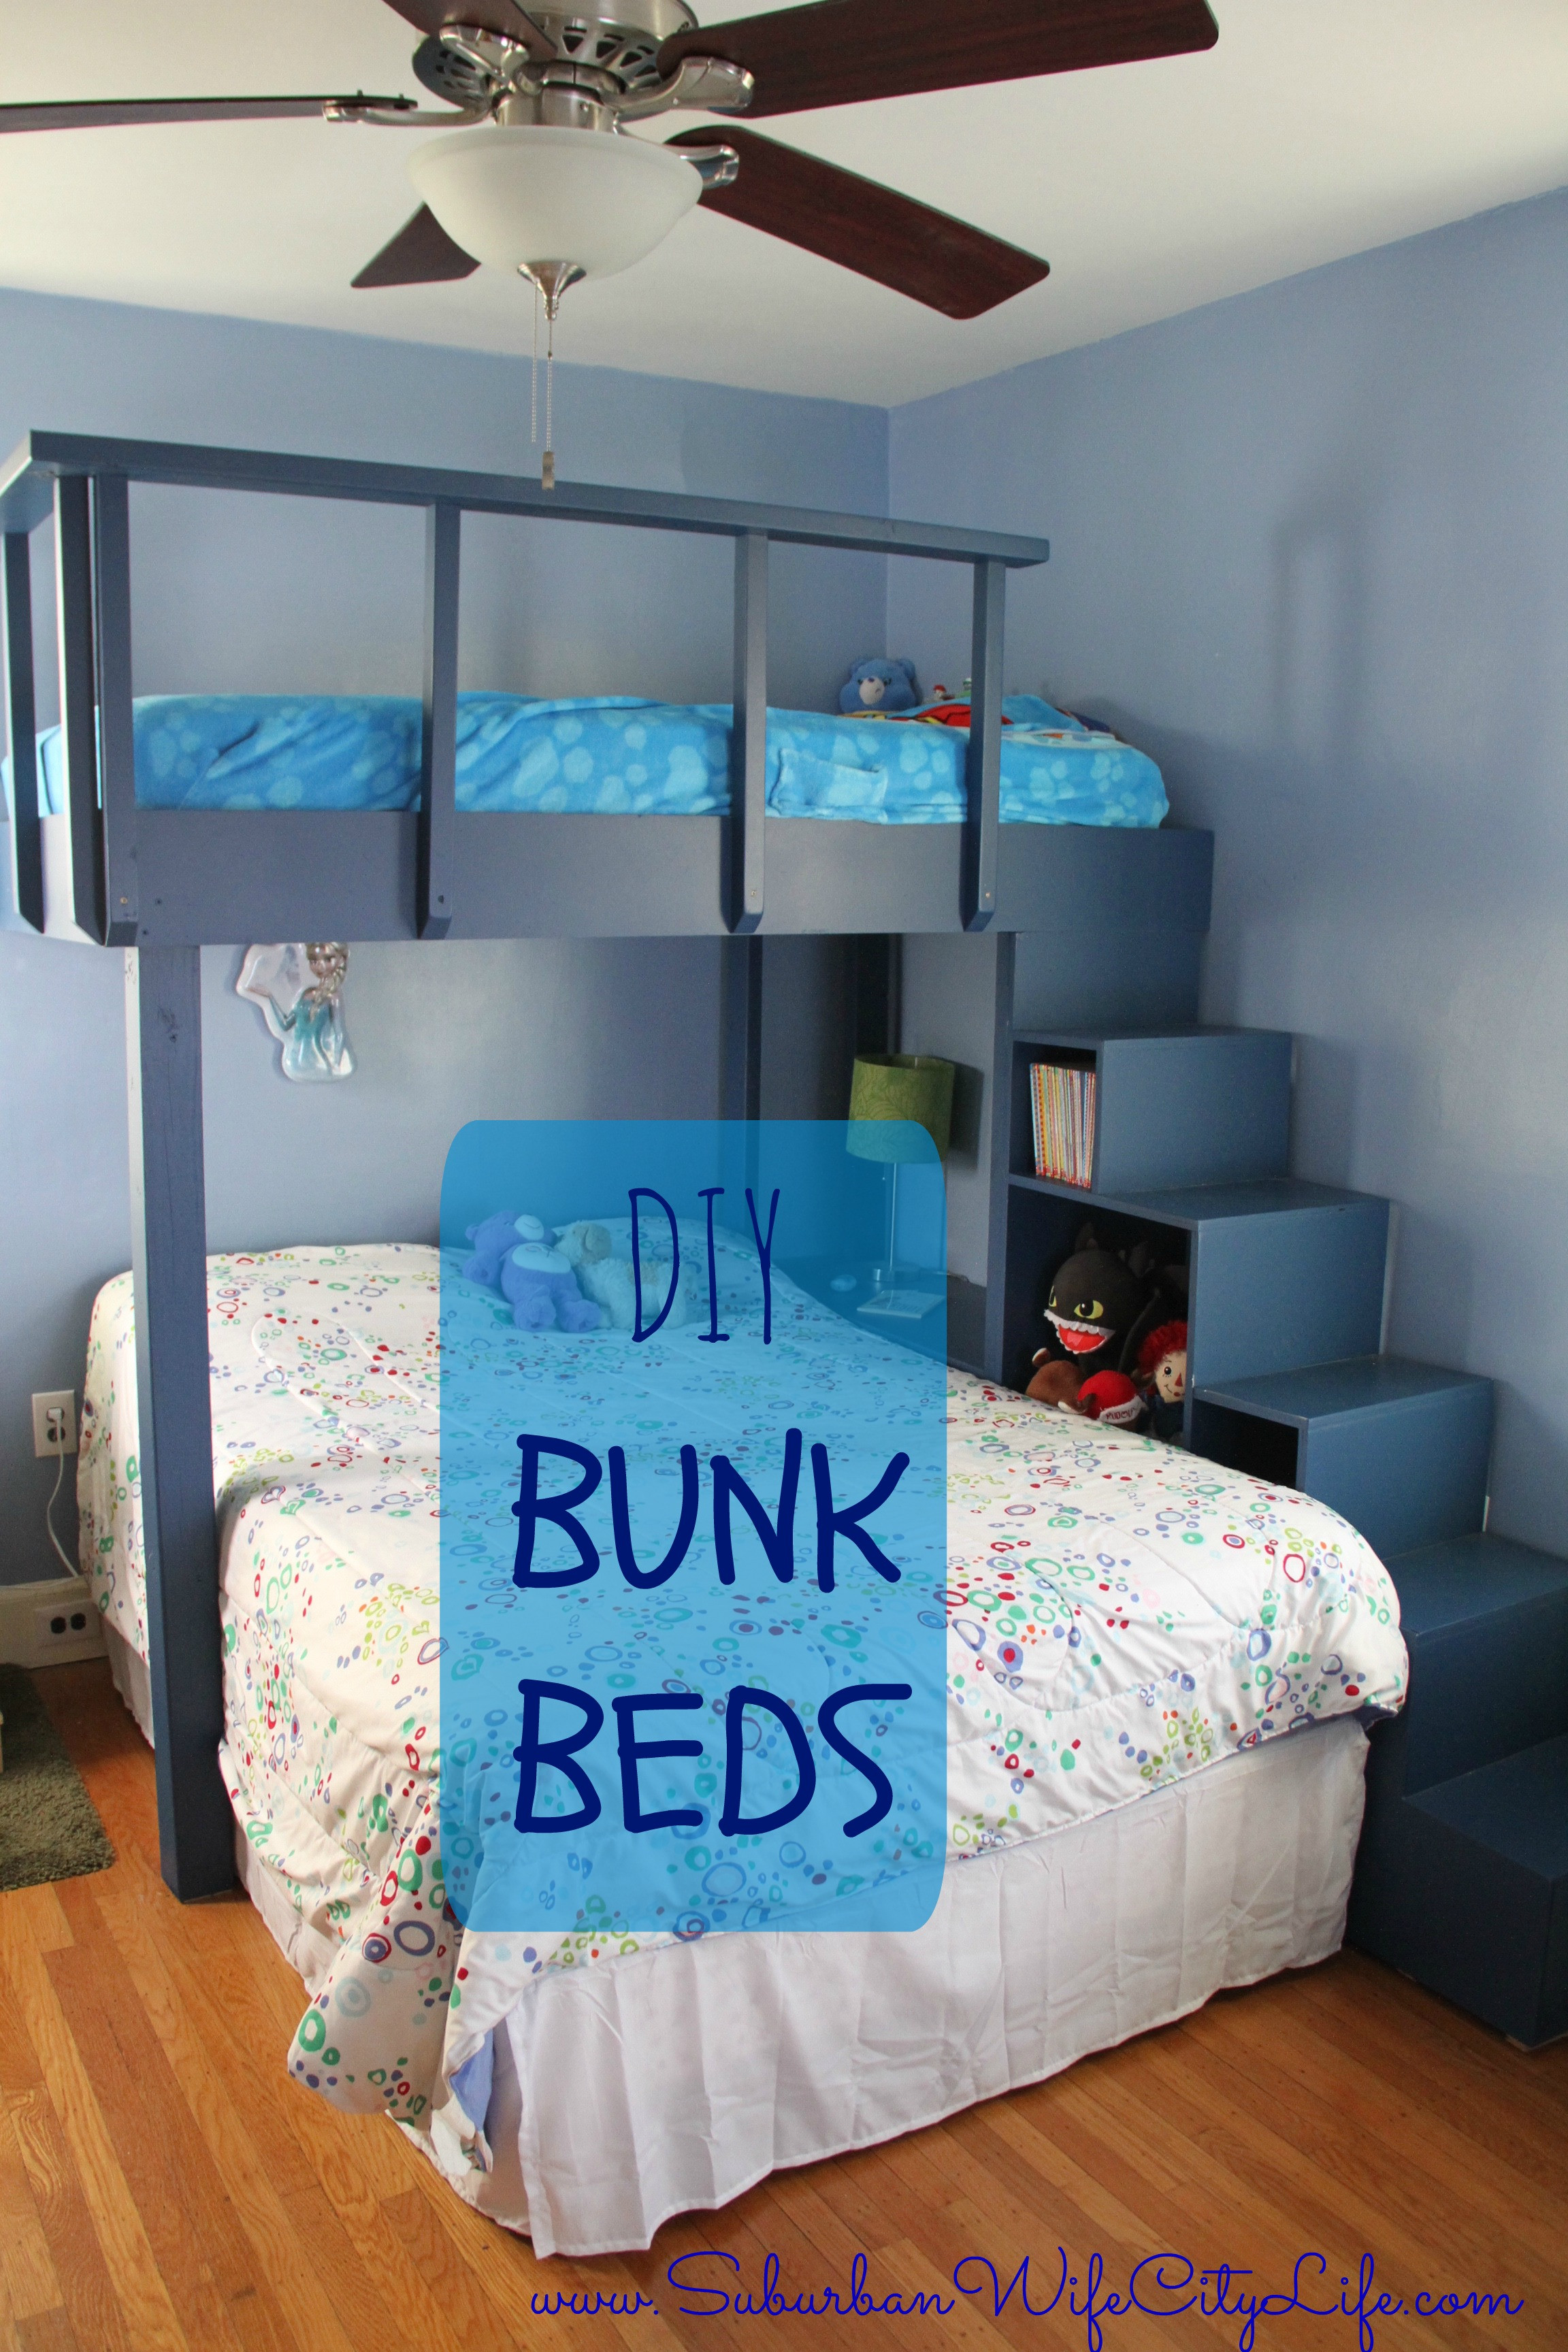 Best ideas about DIY Bunk Beds
. Save or Pin DIY Bunk Beds Suburban Wife City Life Now.